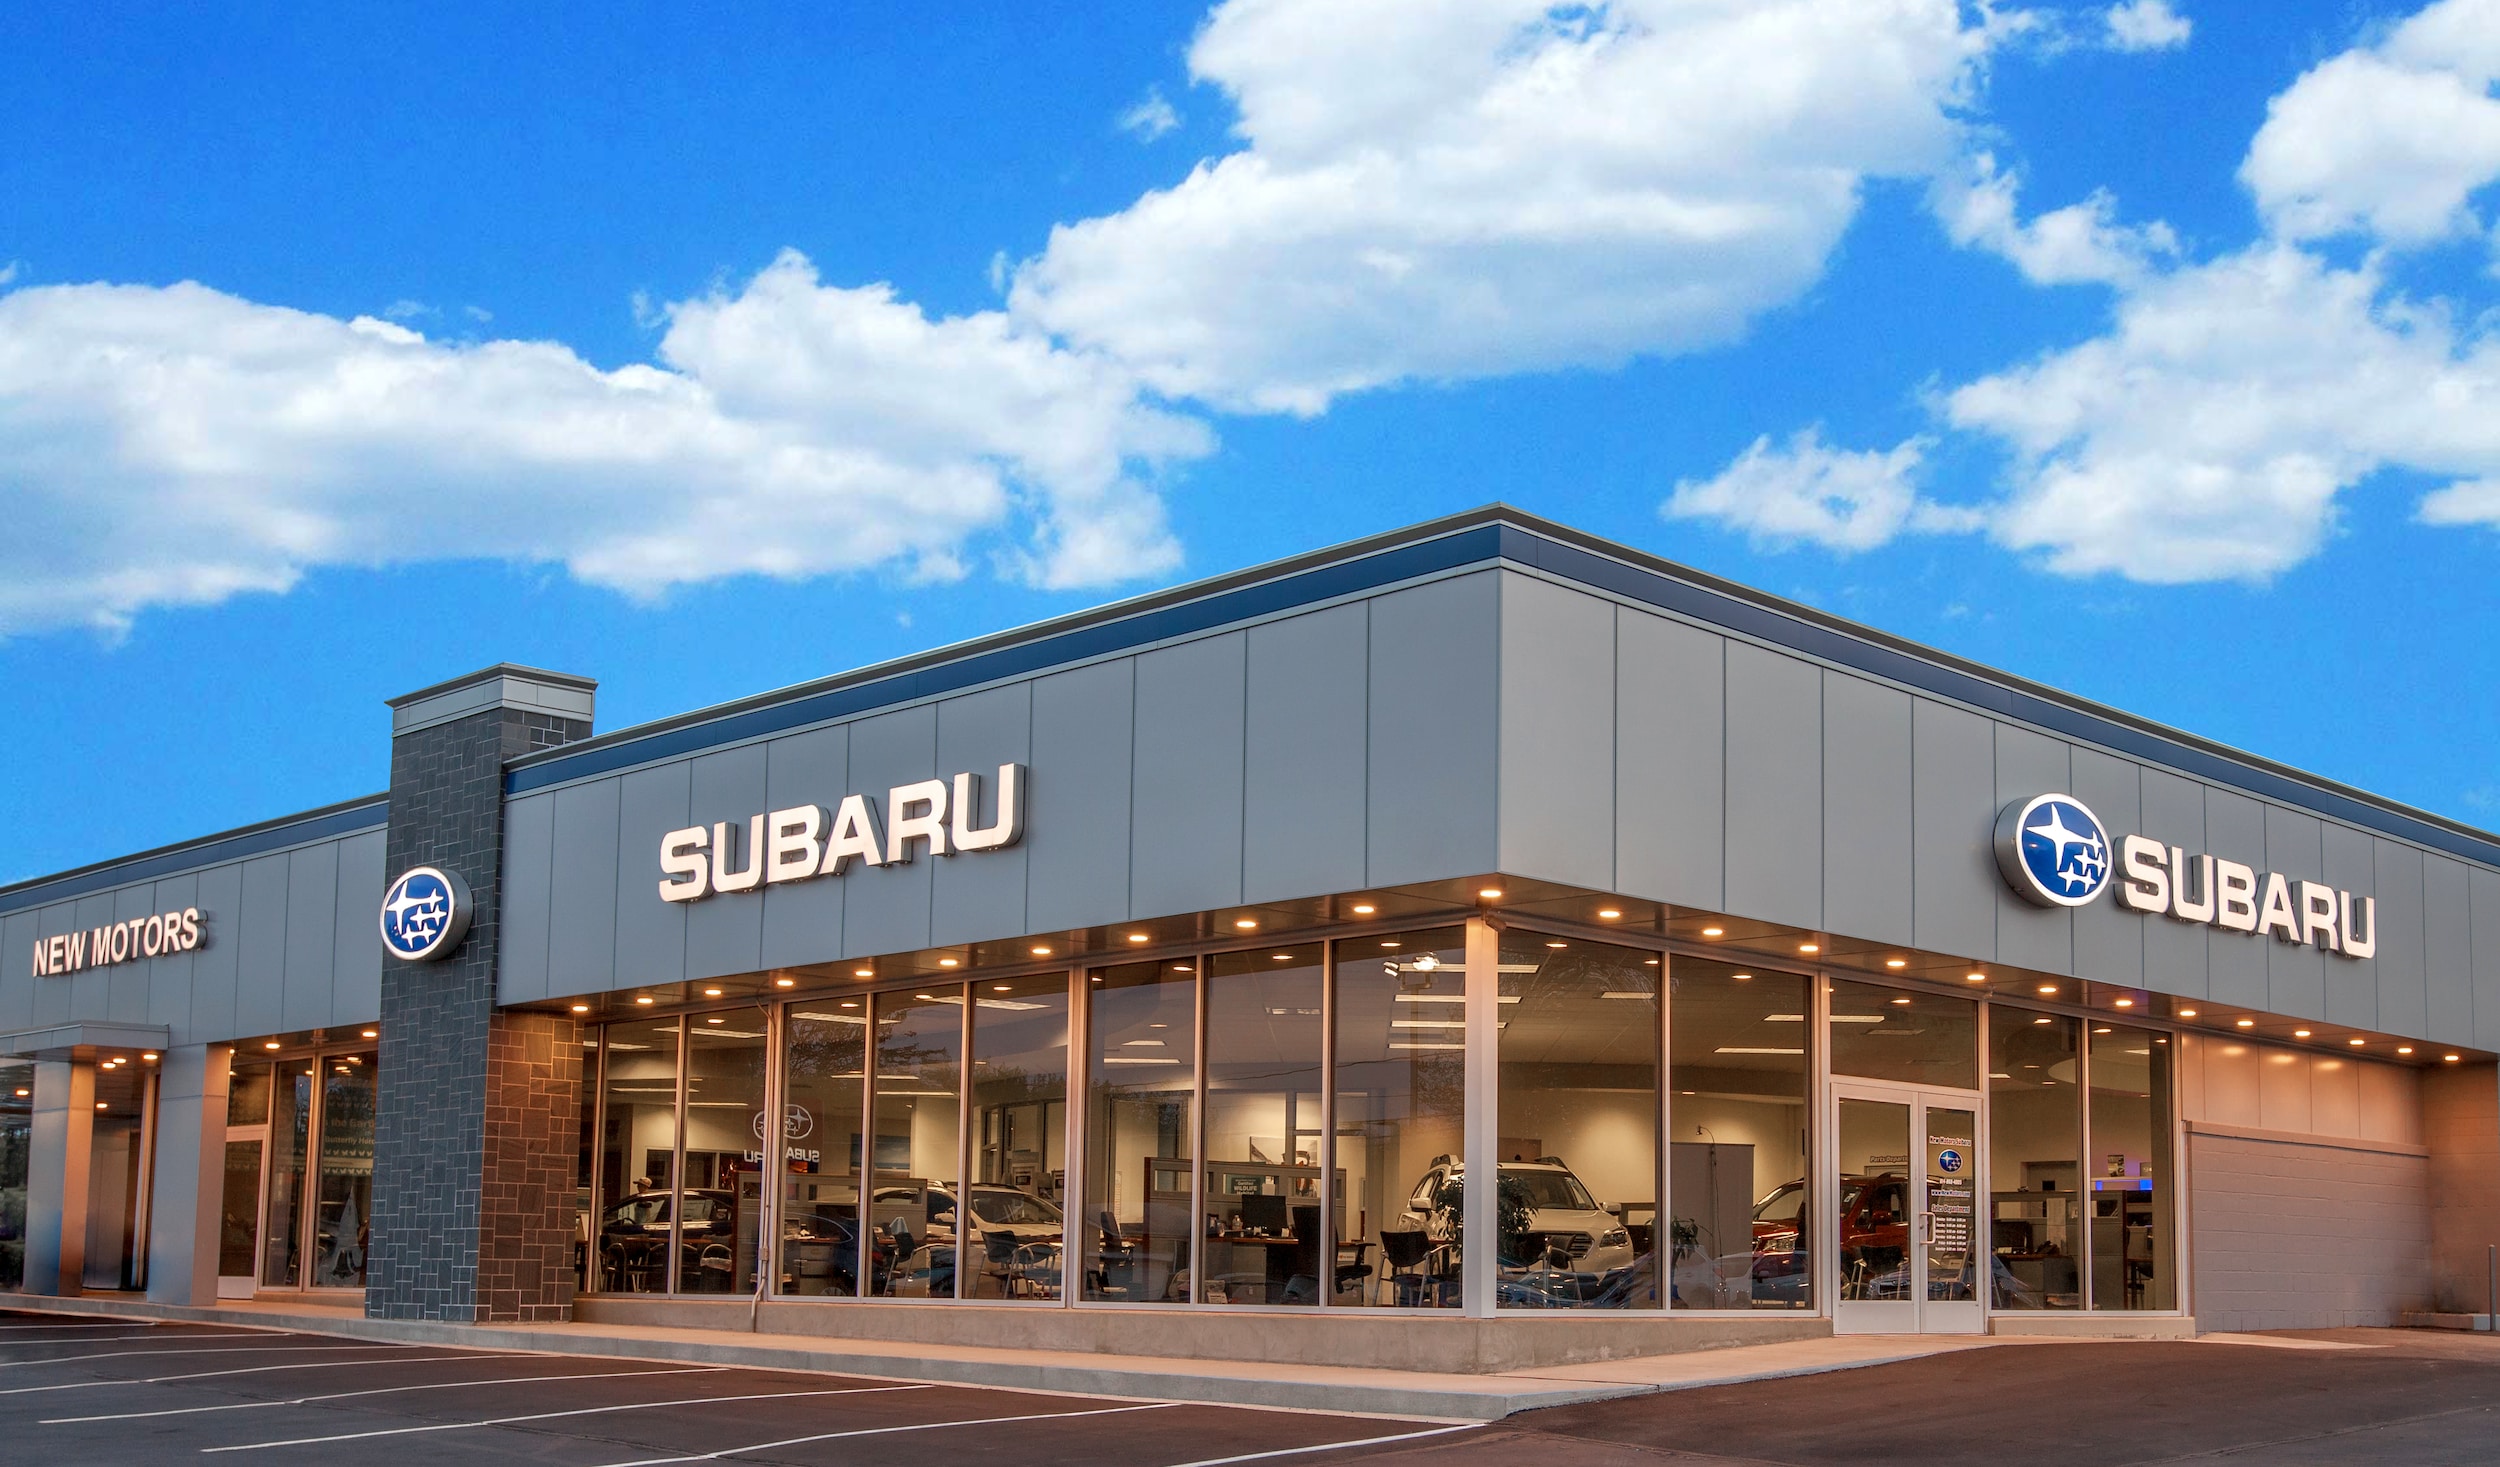 Subaru & Pre Owned Car Dealership in Erie PA. New Motors Subaru